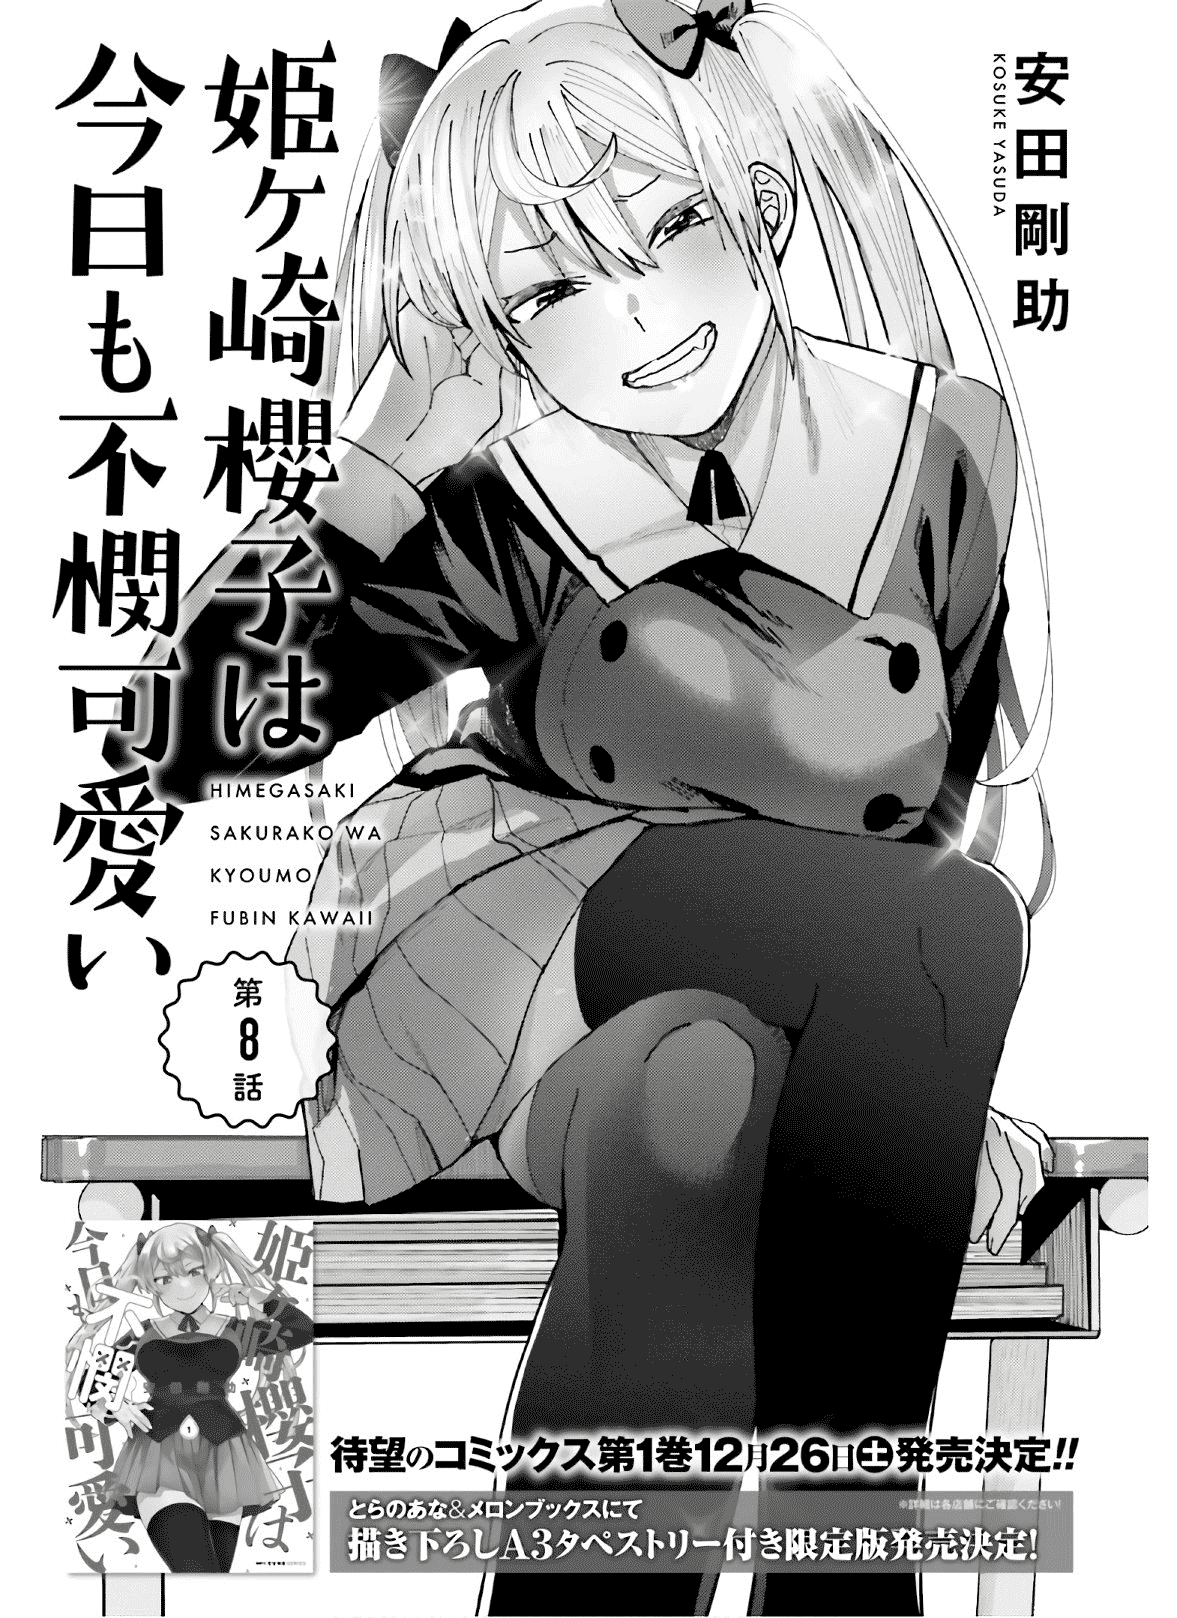 Himegasaki Sakurako Wa Kyoumo Fubin Kawaii! - Page 1